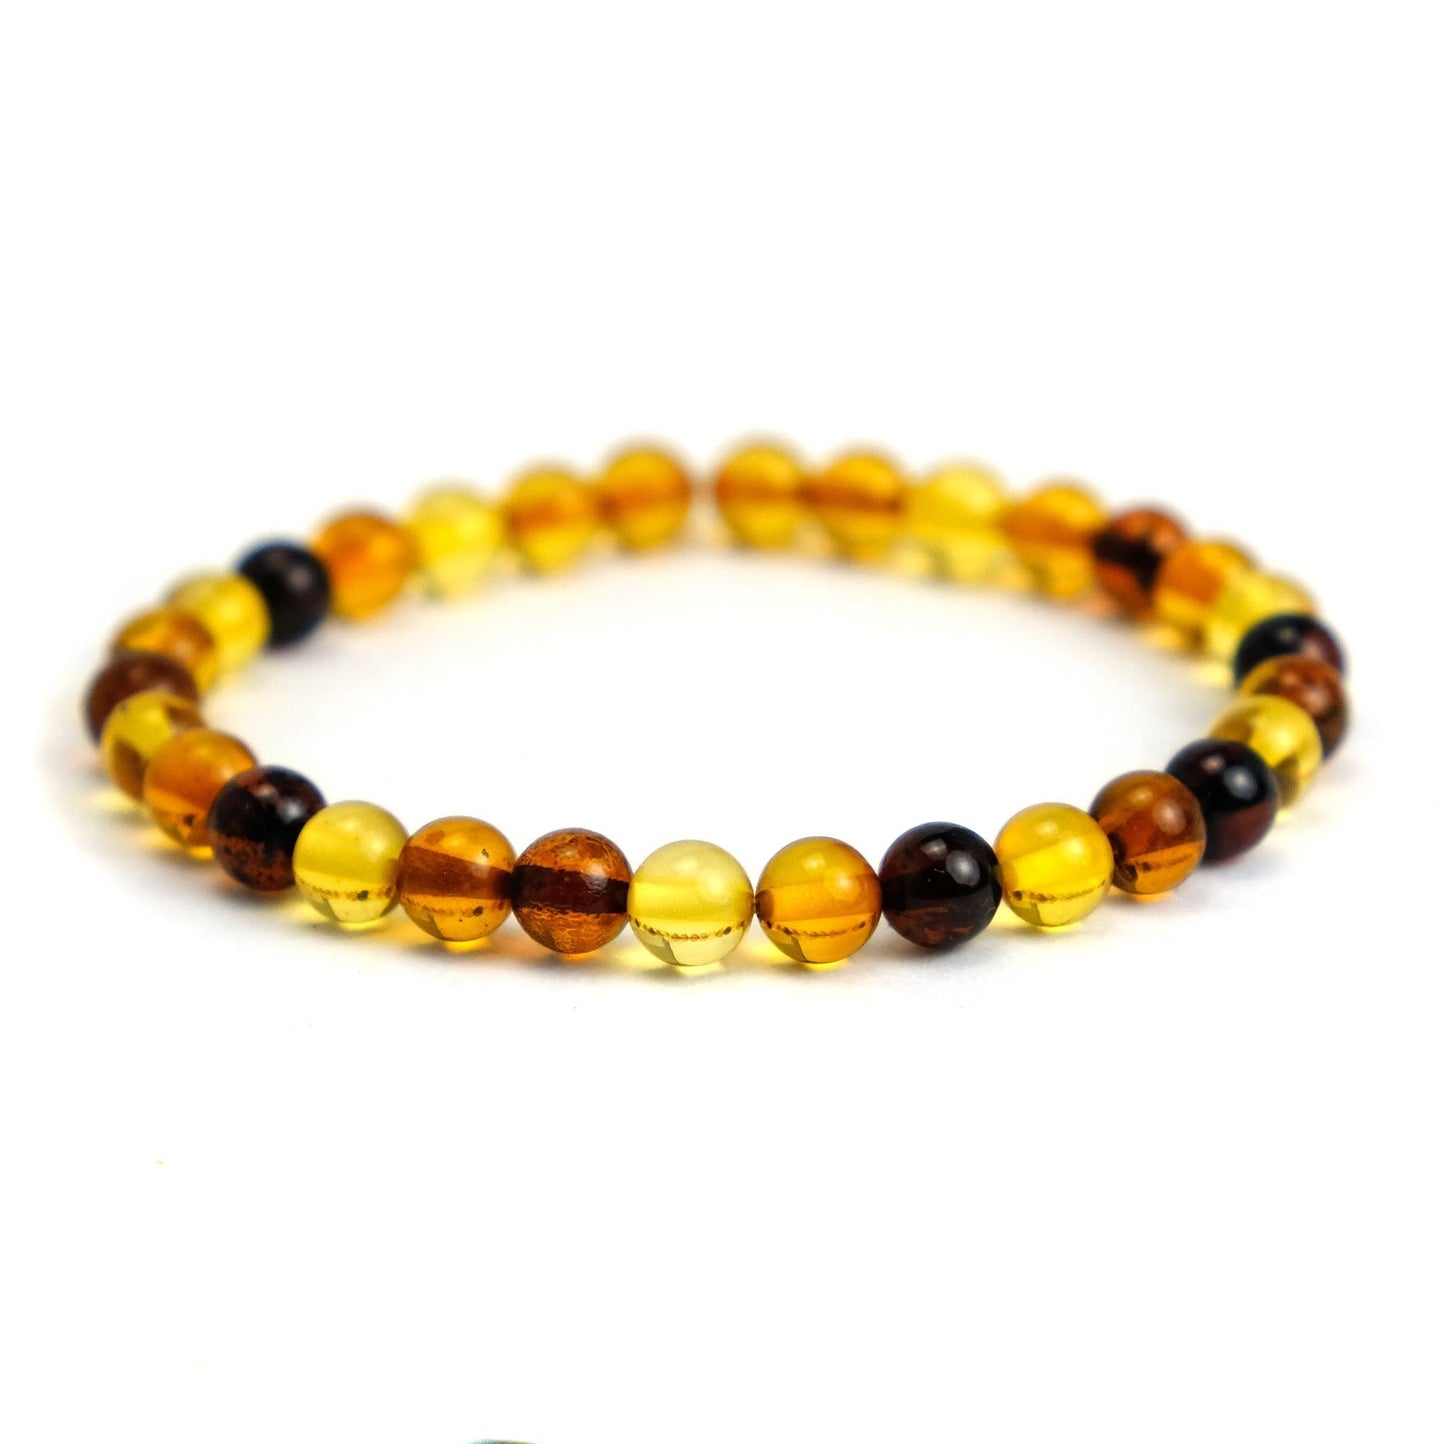 Healing Amber stretch bracelet